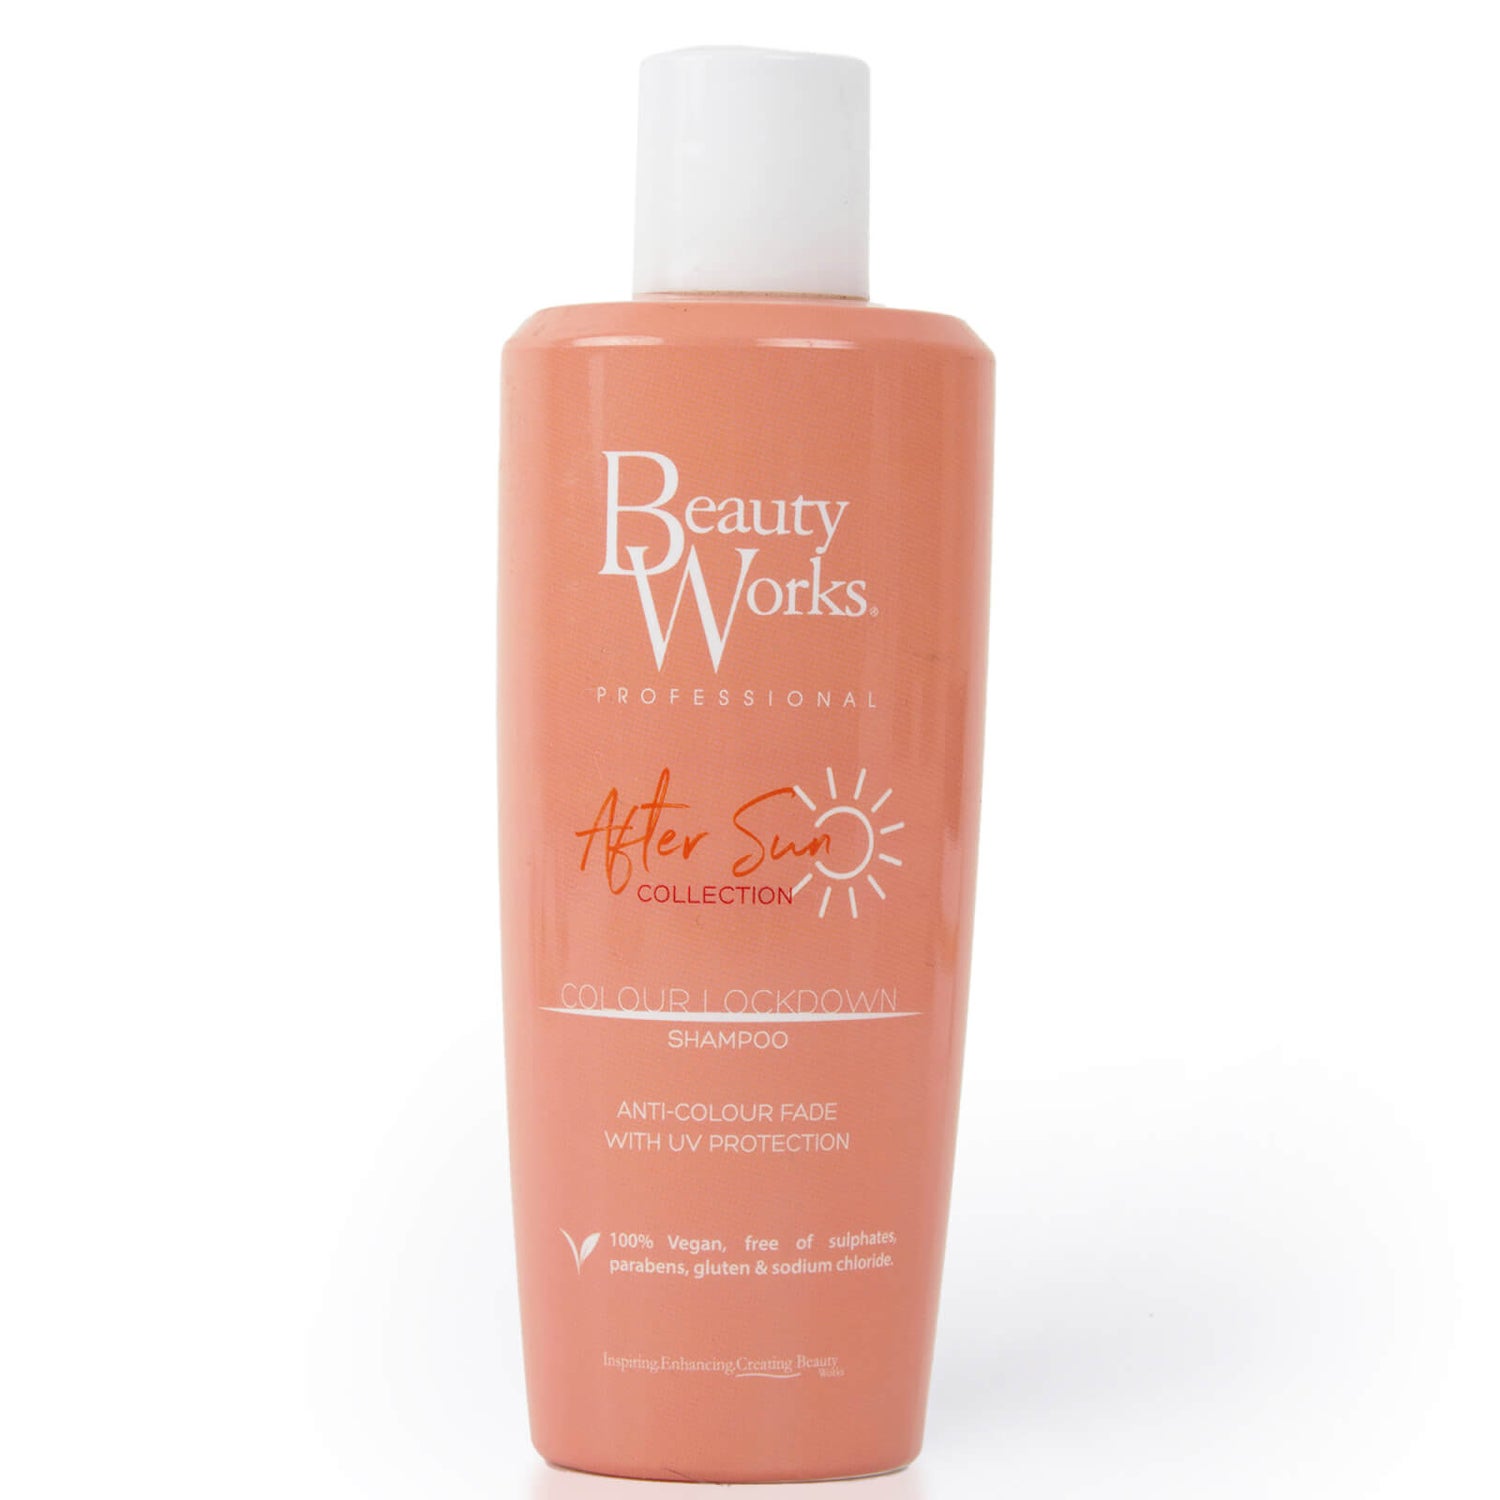 Beauty Works After Sun Colour Lockdown Shampoo 250ml